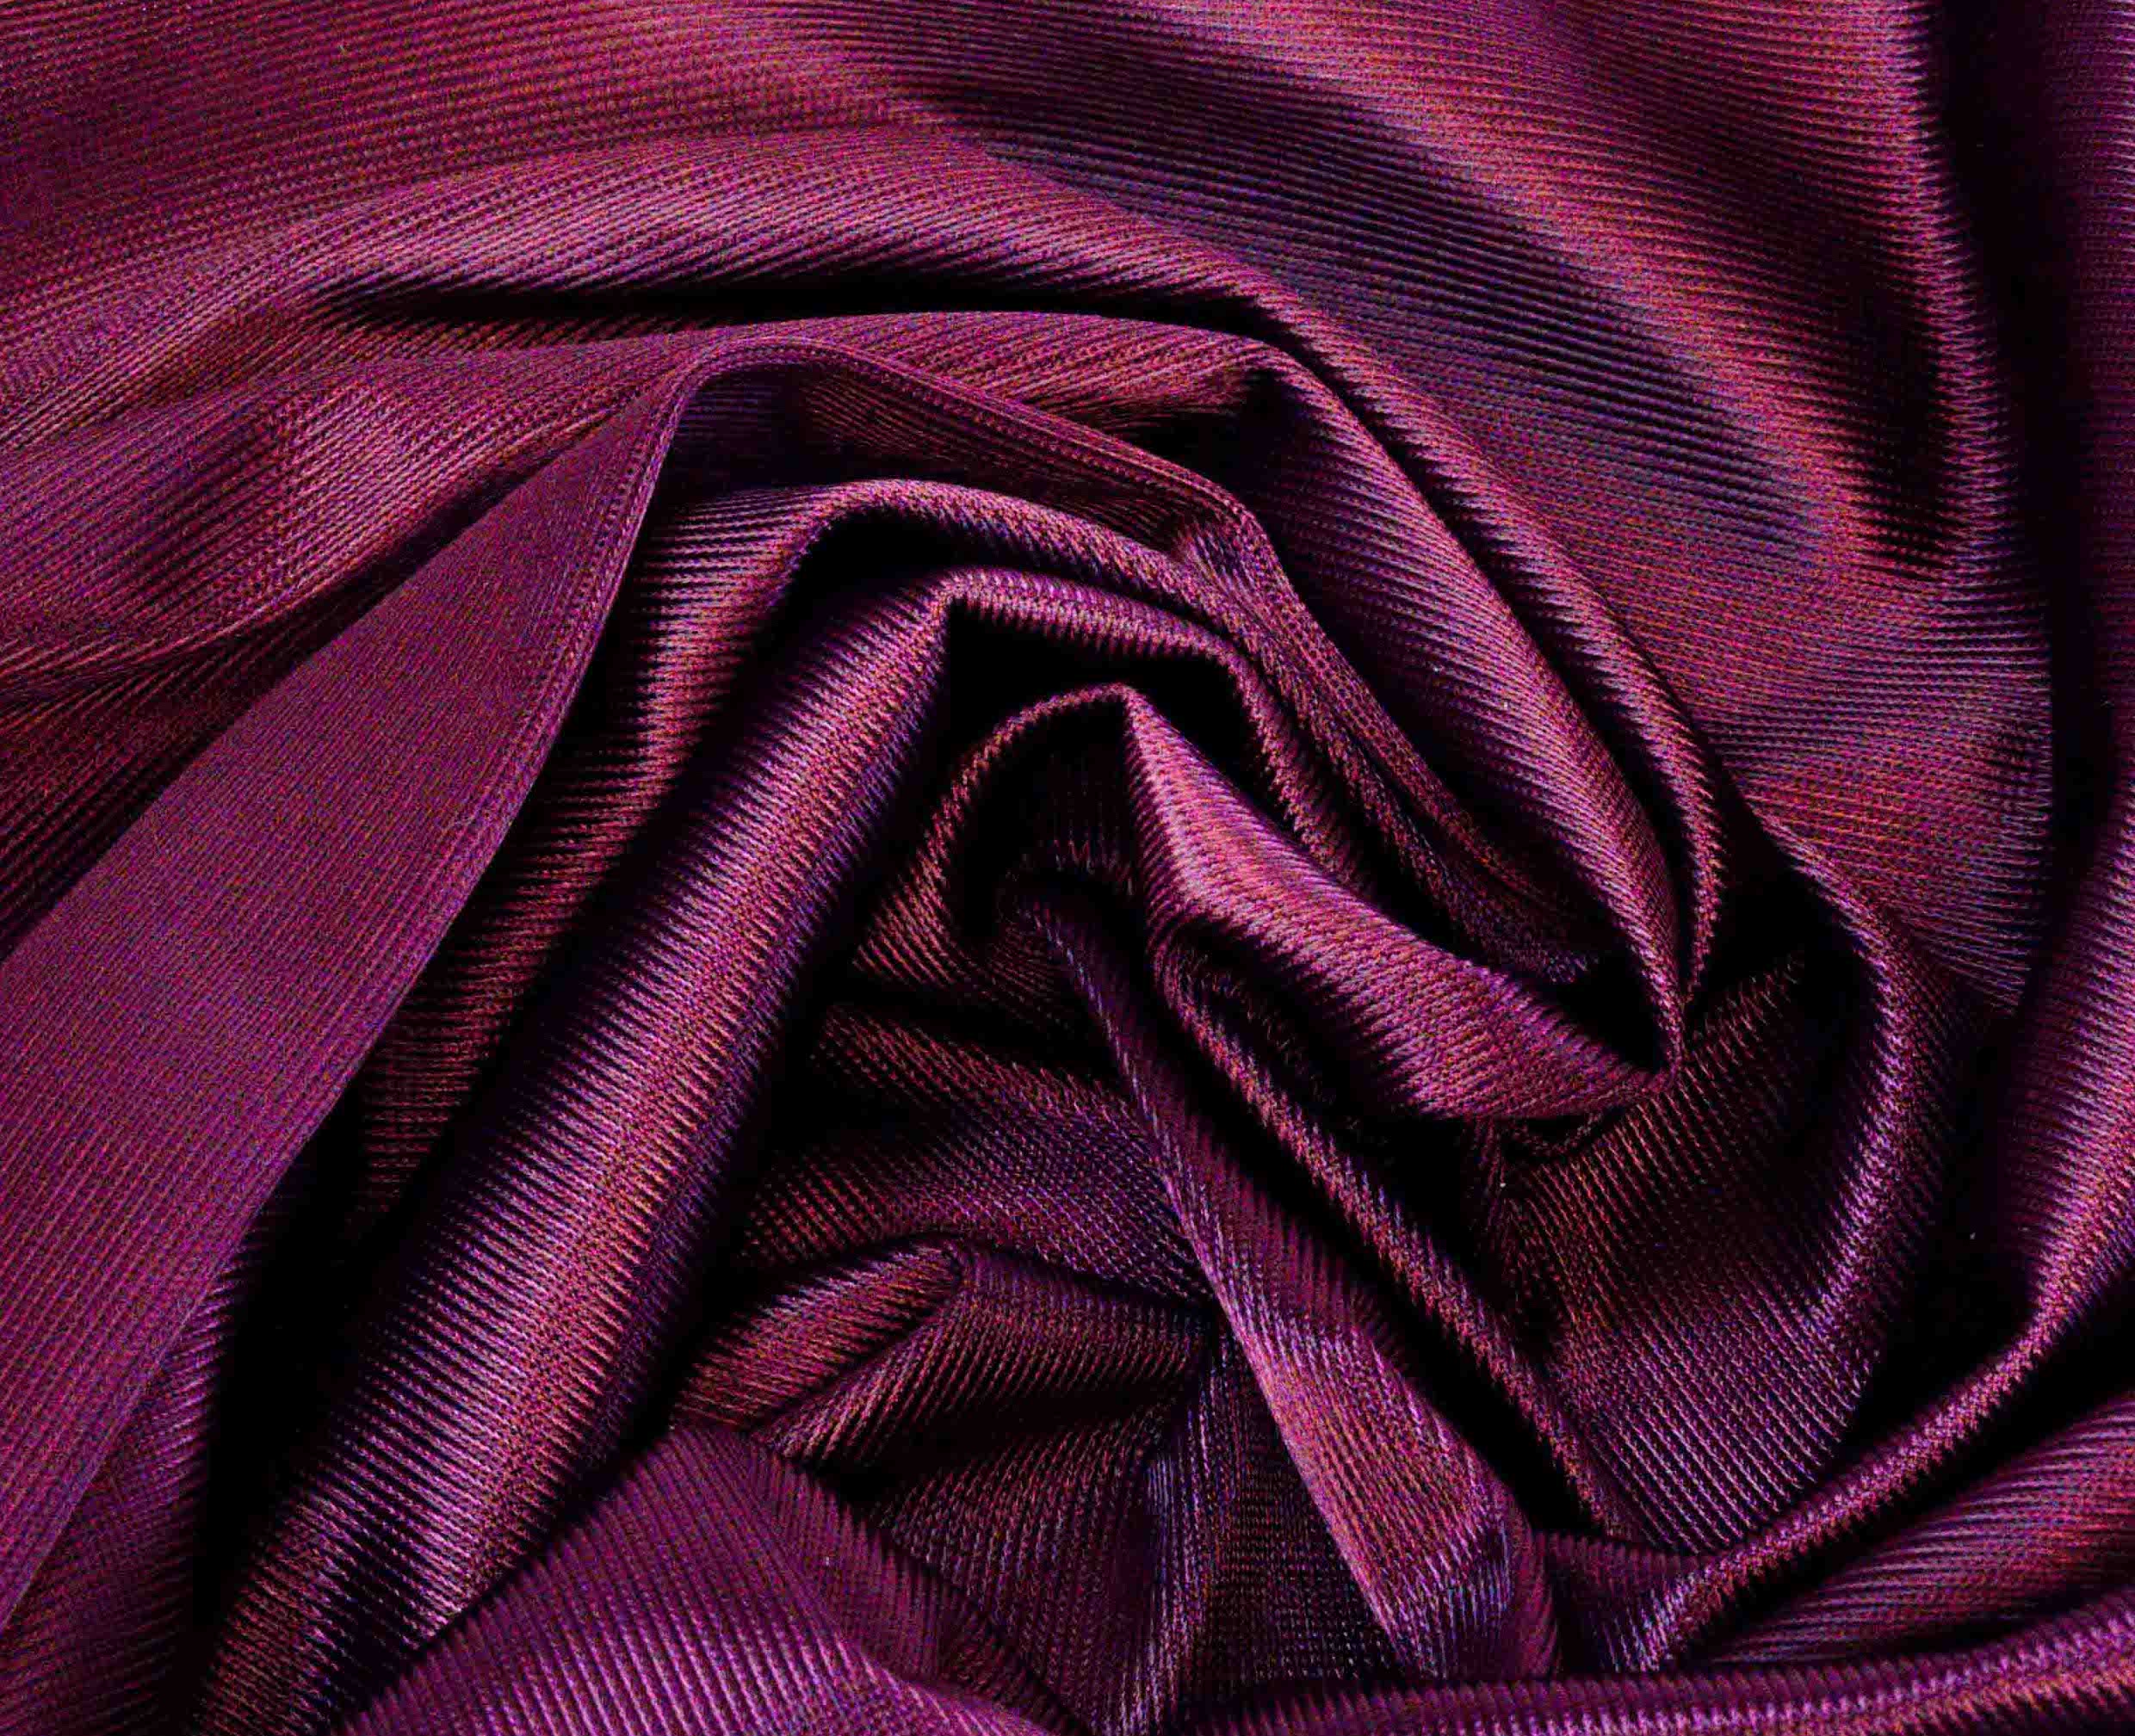 Rubies Bras Stretch Satin fabric in black cherry. Close up.